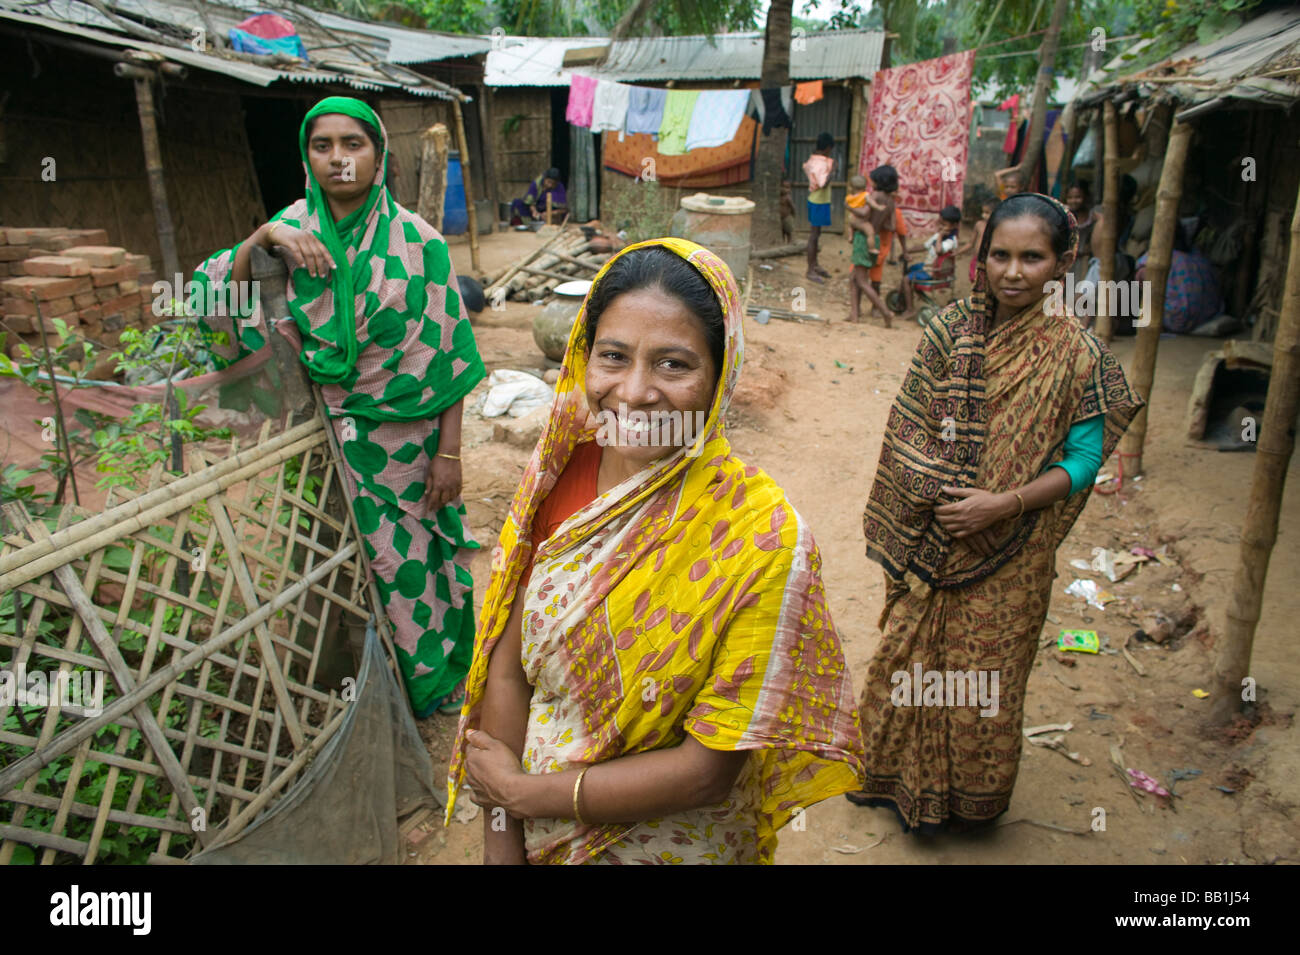 https://c8.alamy.com/comp/BB1J54/women-children-mipur-village-outside-of-dhaka-bangladesh-BB1J54.jpg